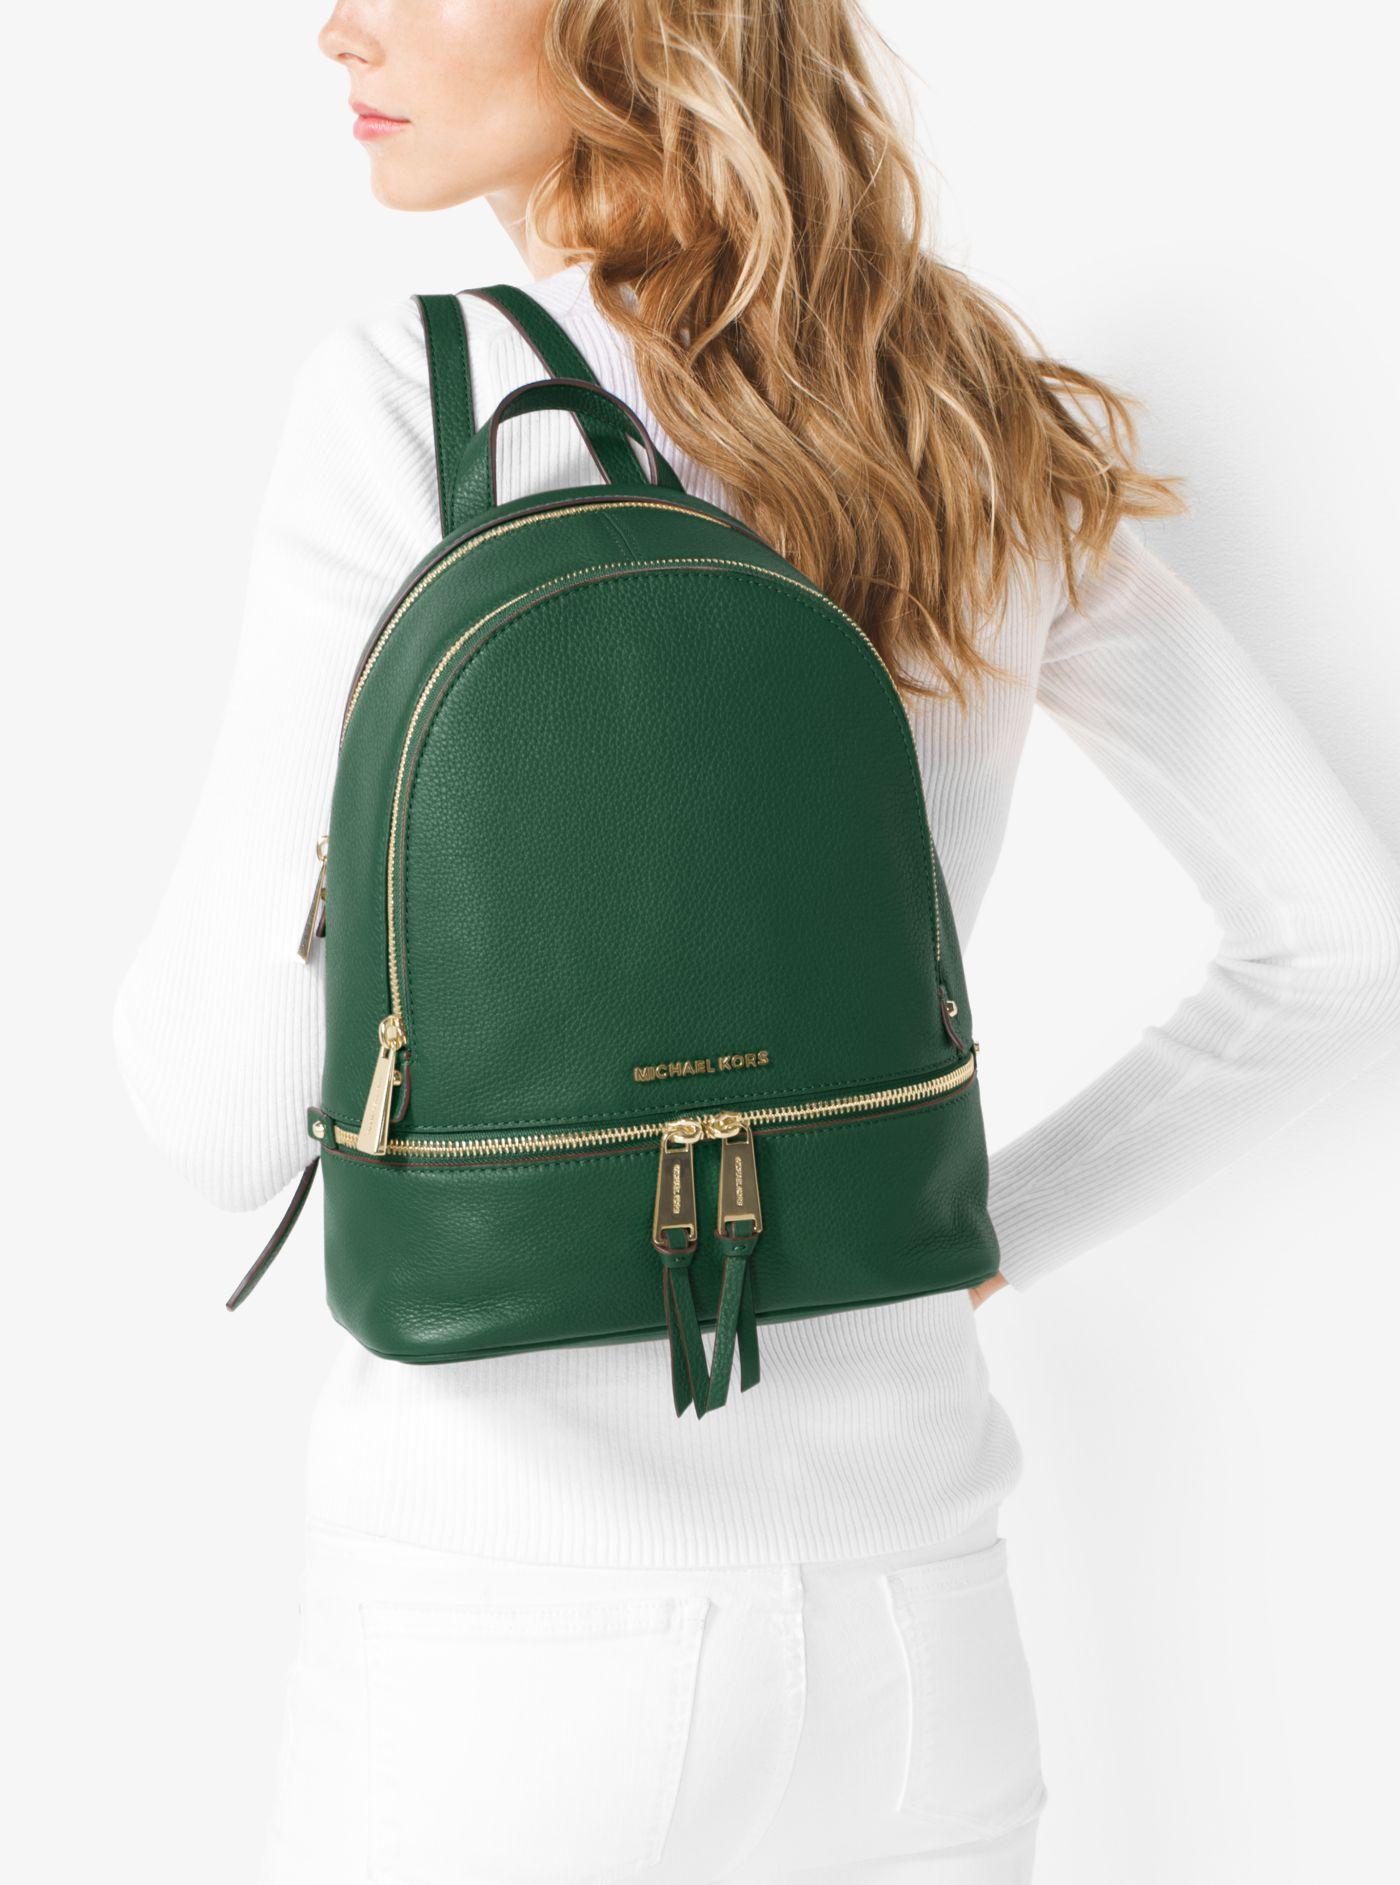 michael kors backpack green